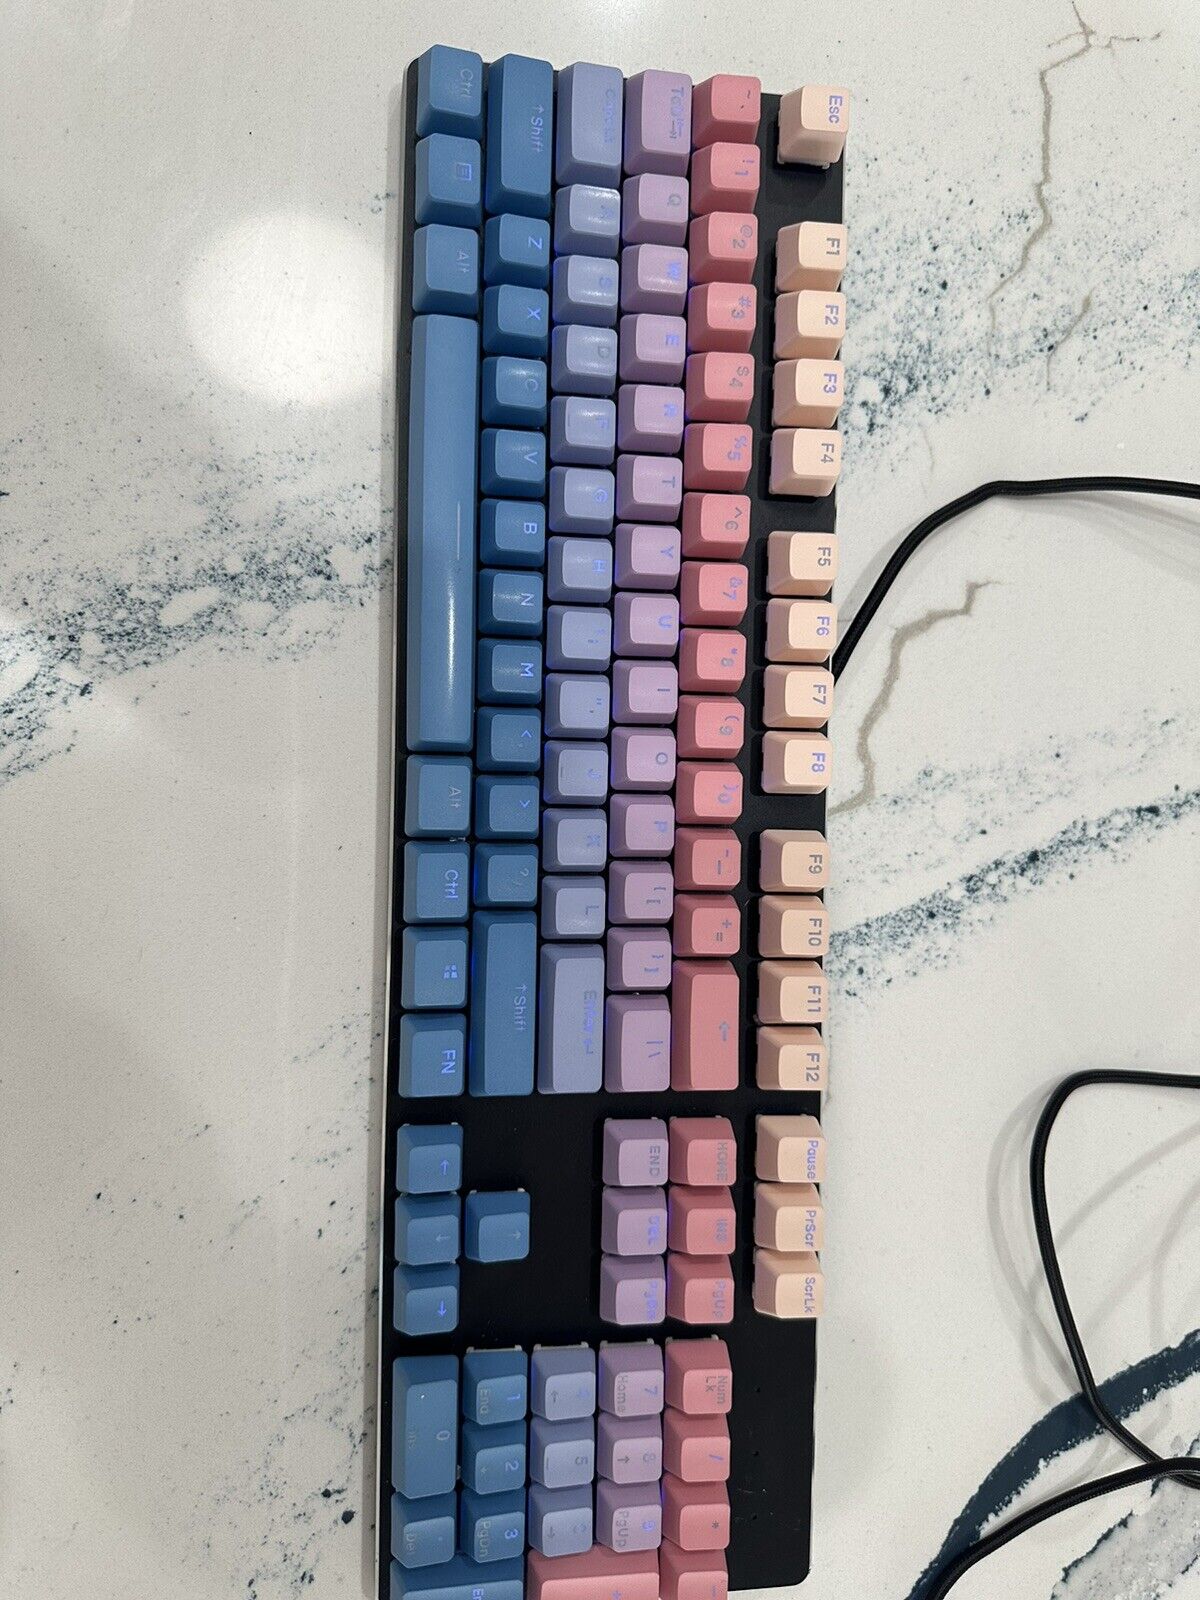 Glorious GMMK USB Keyboard - With Lubed Pandas And Custom Key Caps